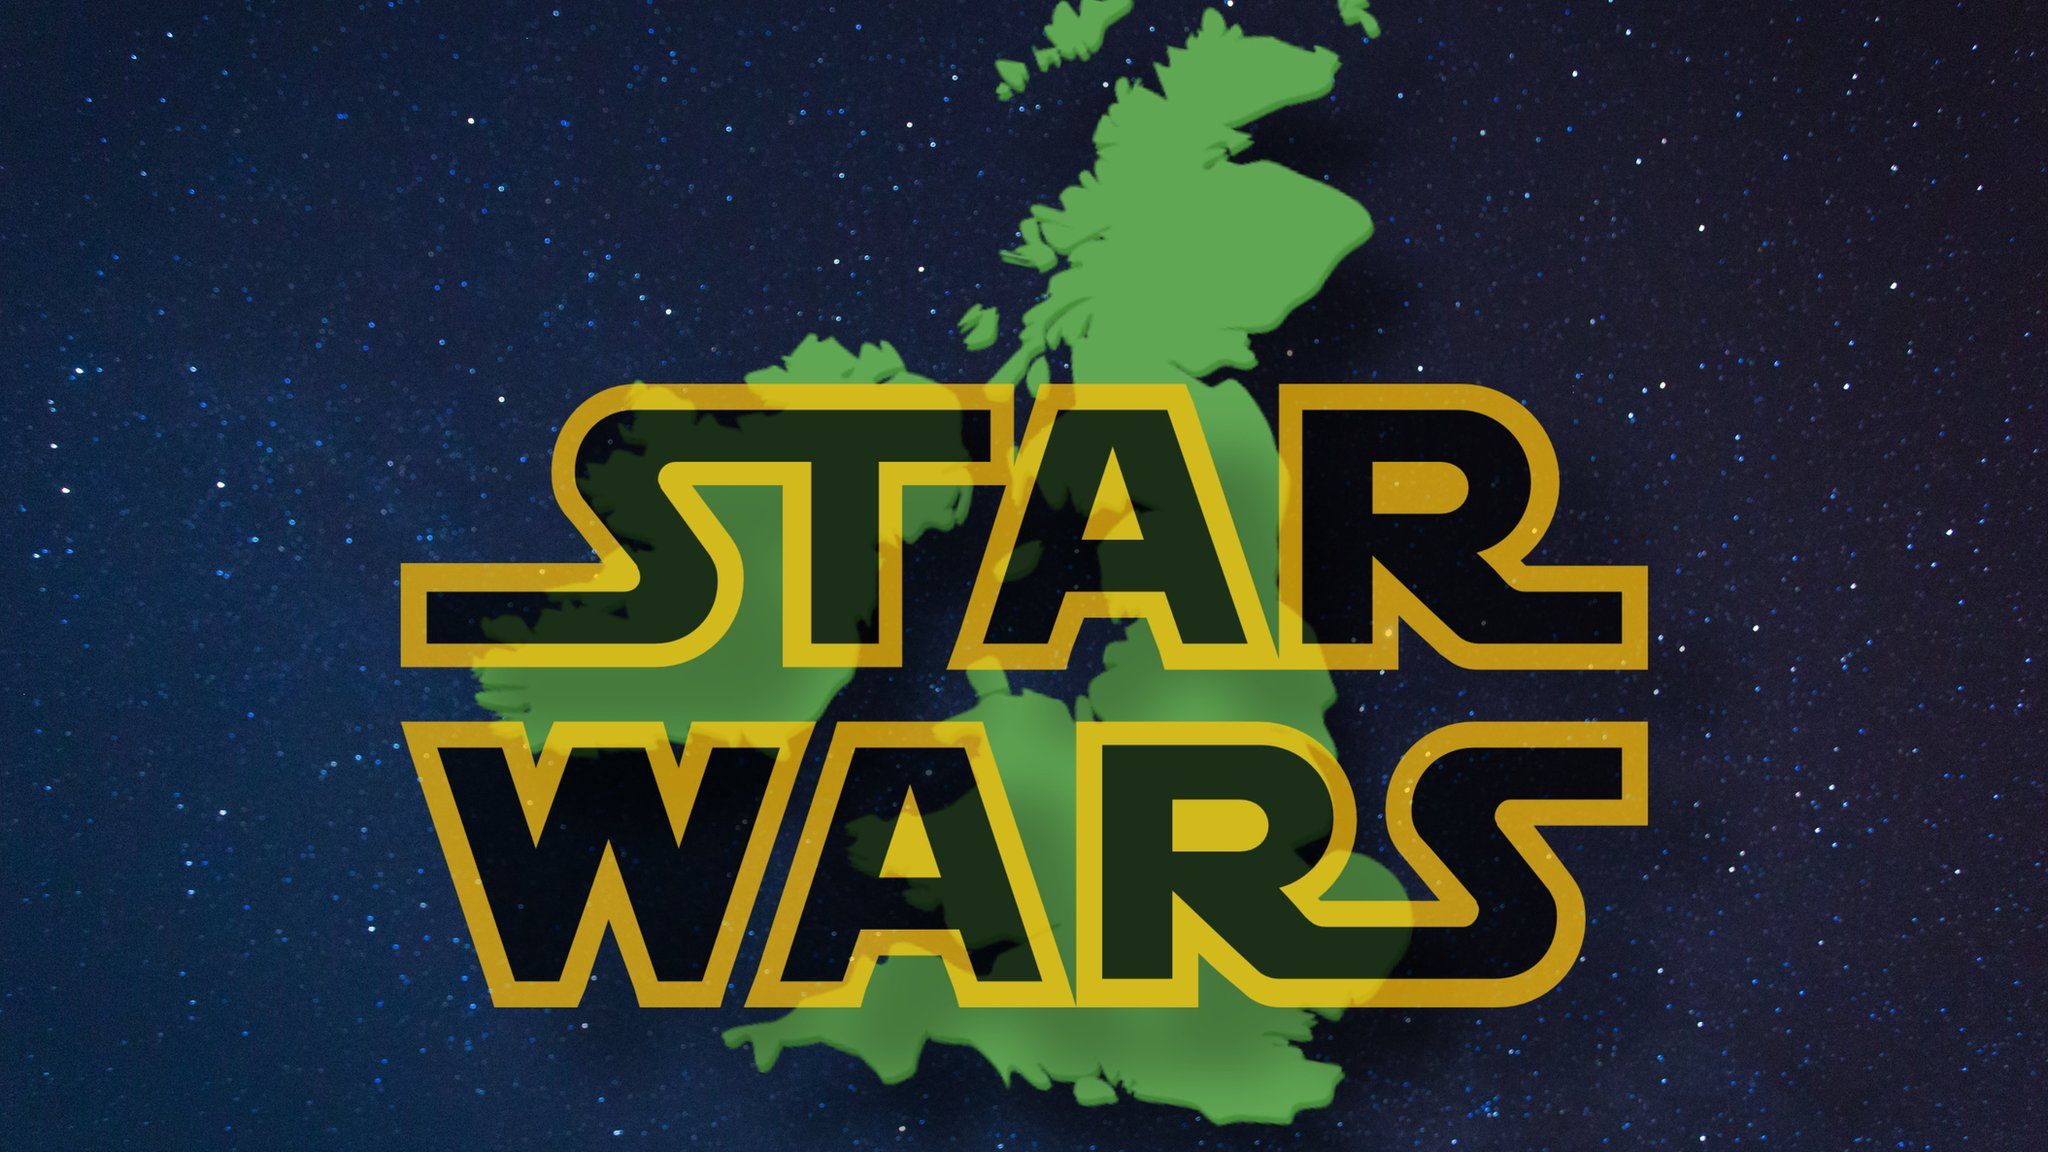 Star Wars logo over map of UK.